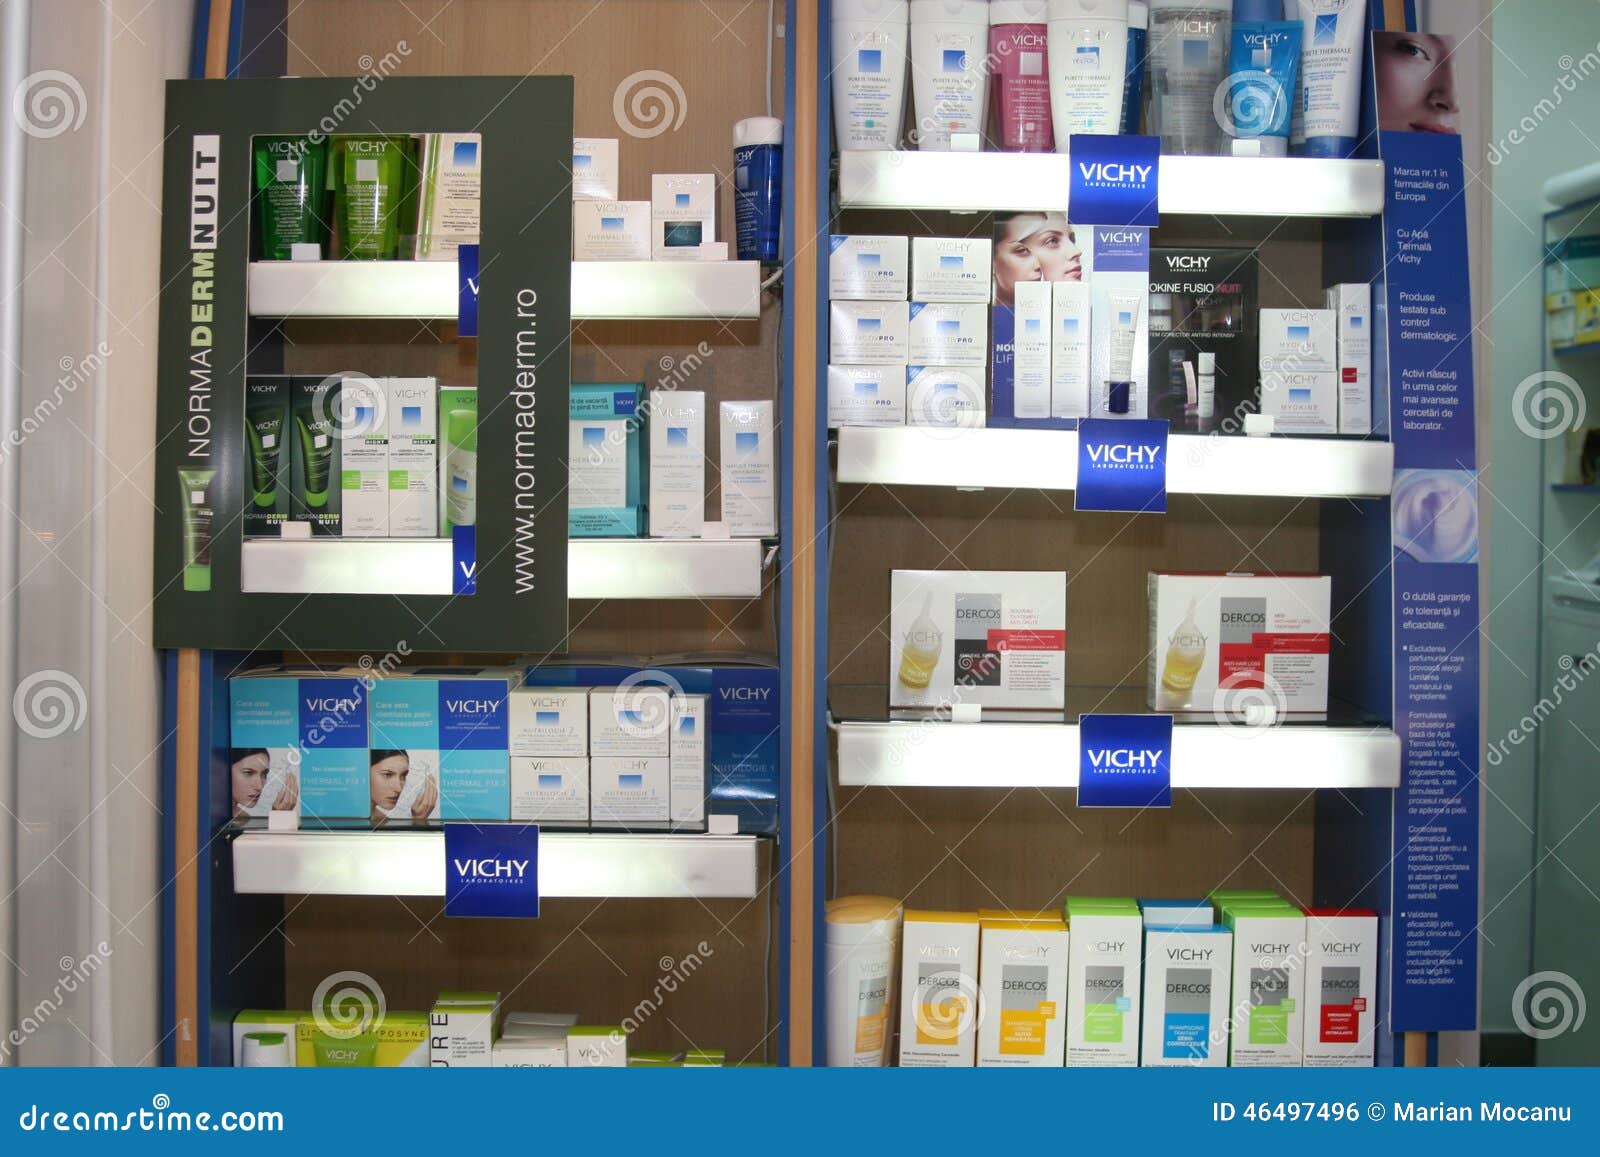 https://thumbs.dreamstime.com/z/pharmacy-shelves-pharmaceutical-products-displayed-inside-drug-store-46497496.jpg